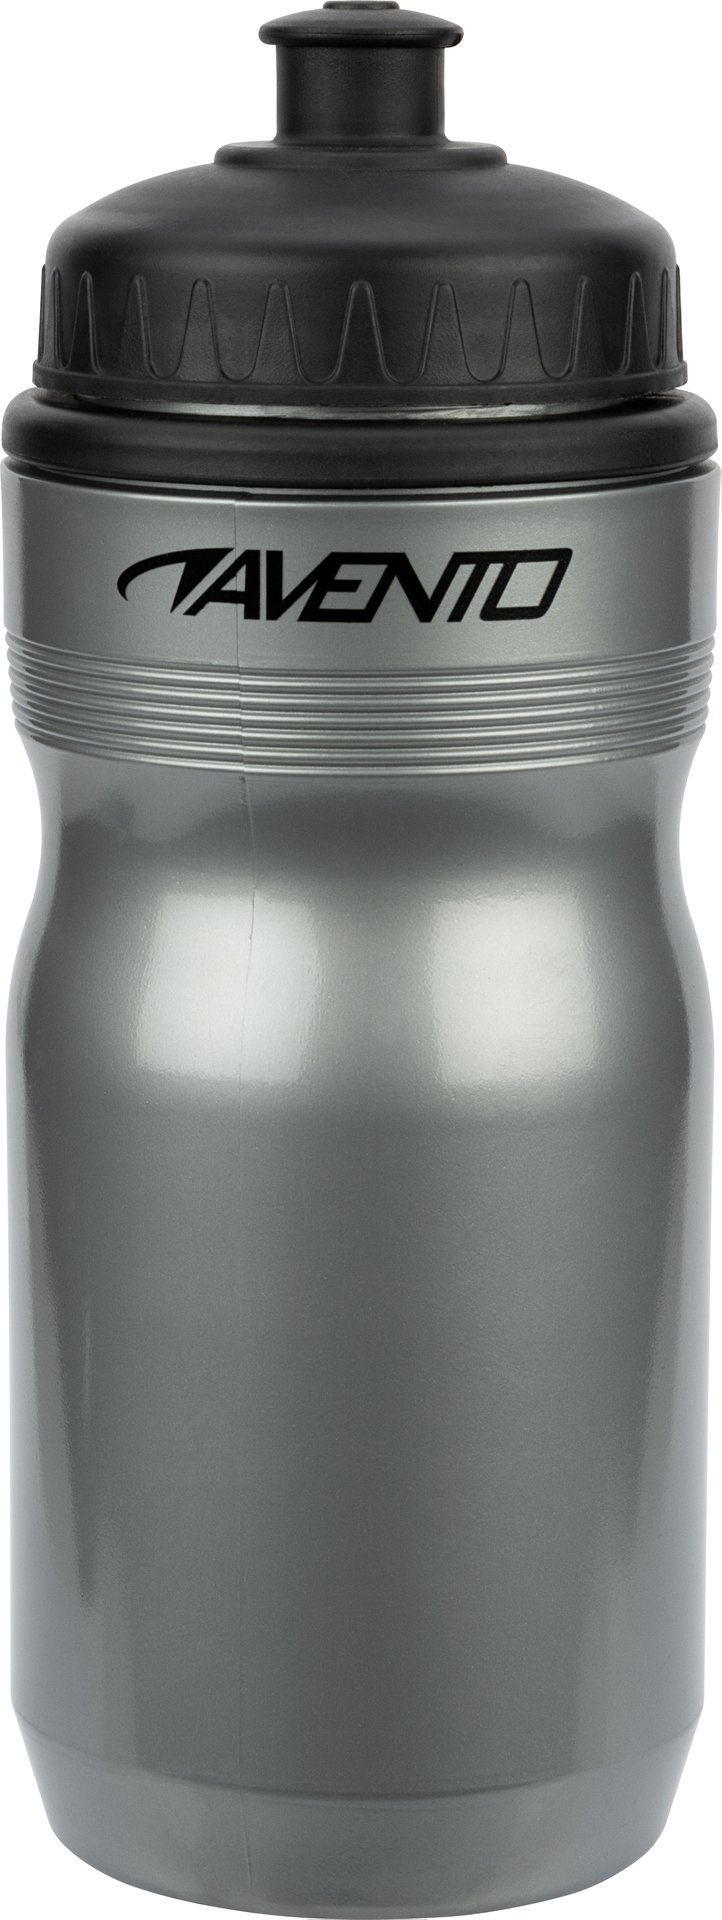 Avento® Avento - Sportbidon • Duduma 0.5 Liter • Zilvergrijs/Zwart